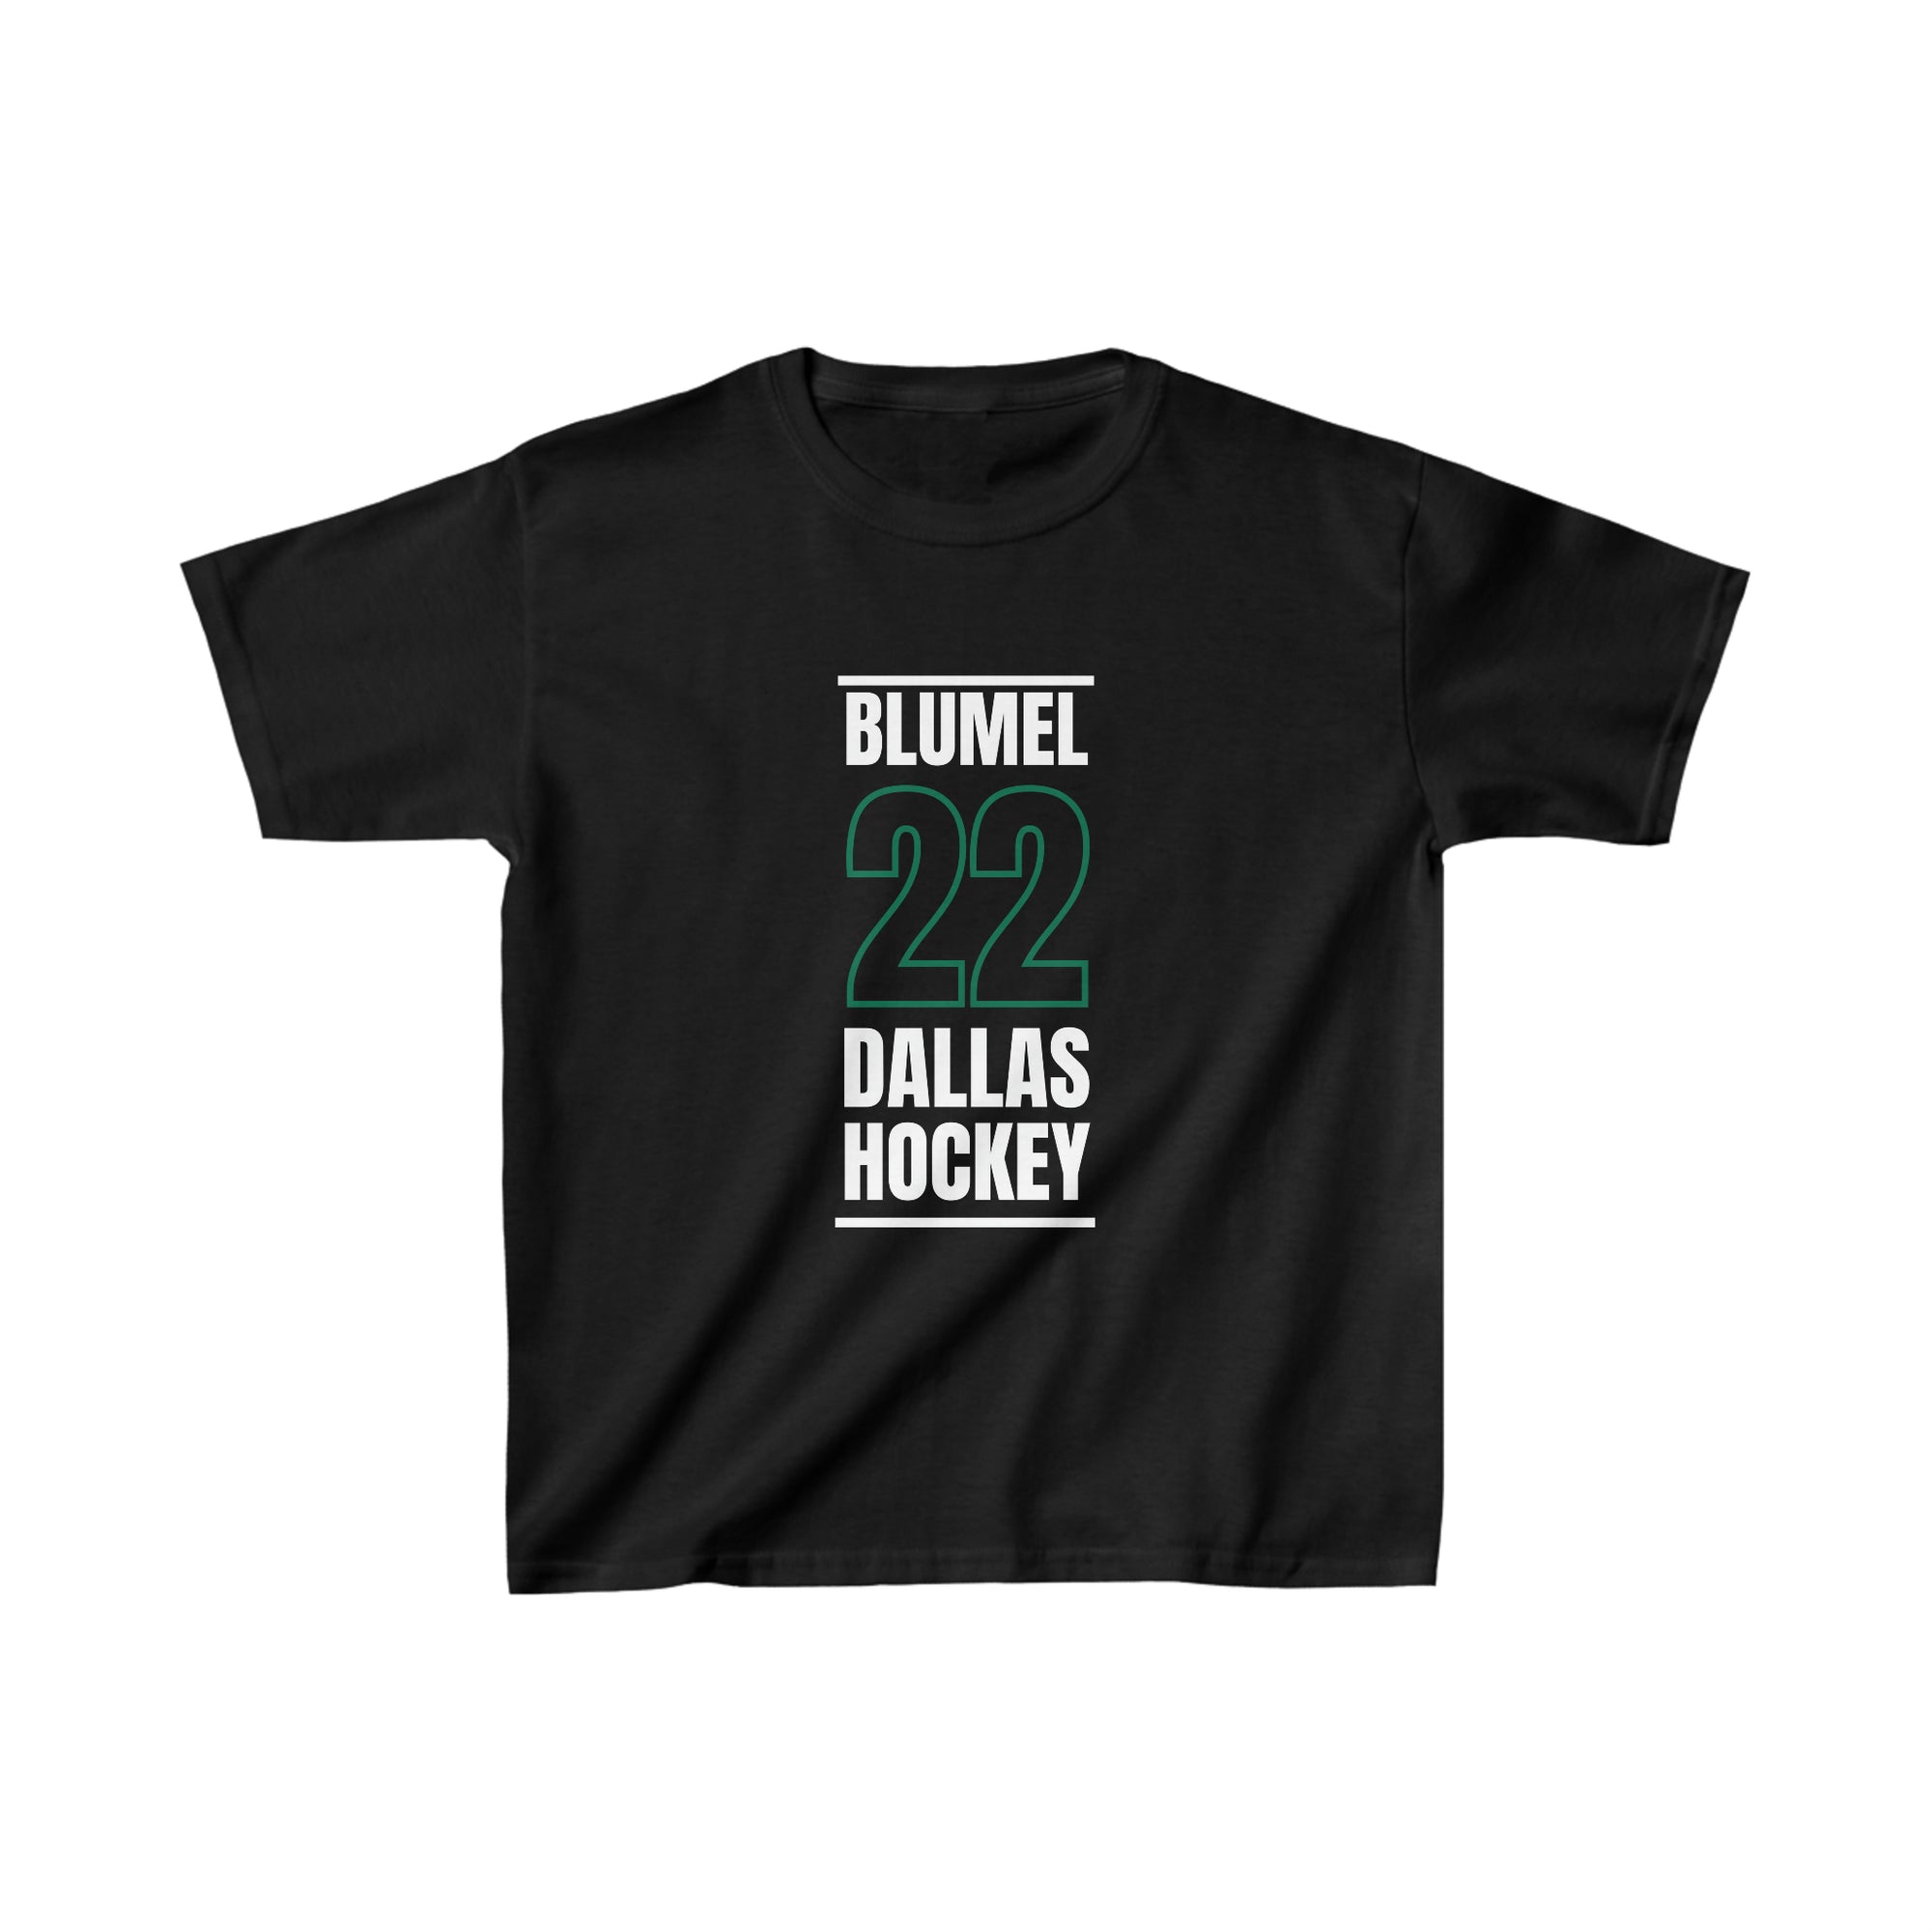 Blumel 22 Dallas Hockey Black Vertical Design Kids Tee